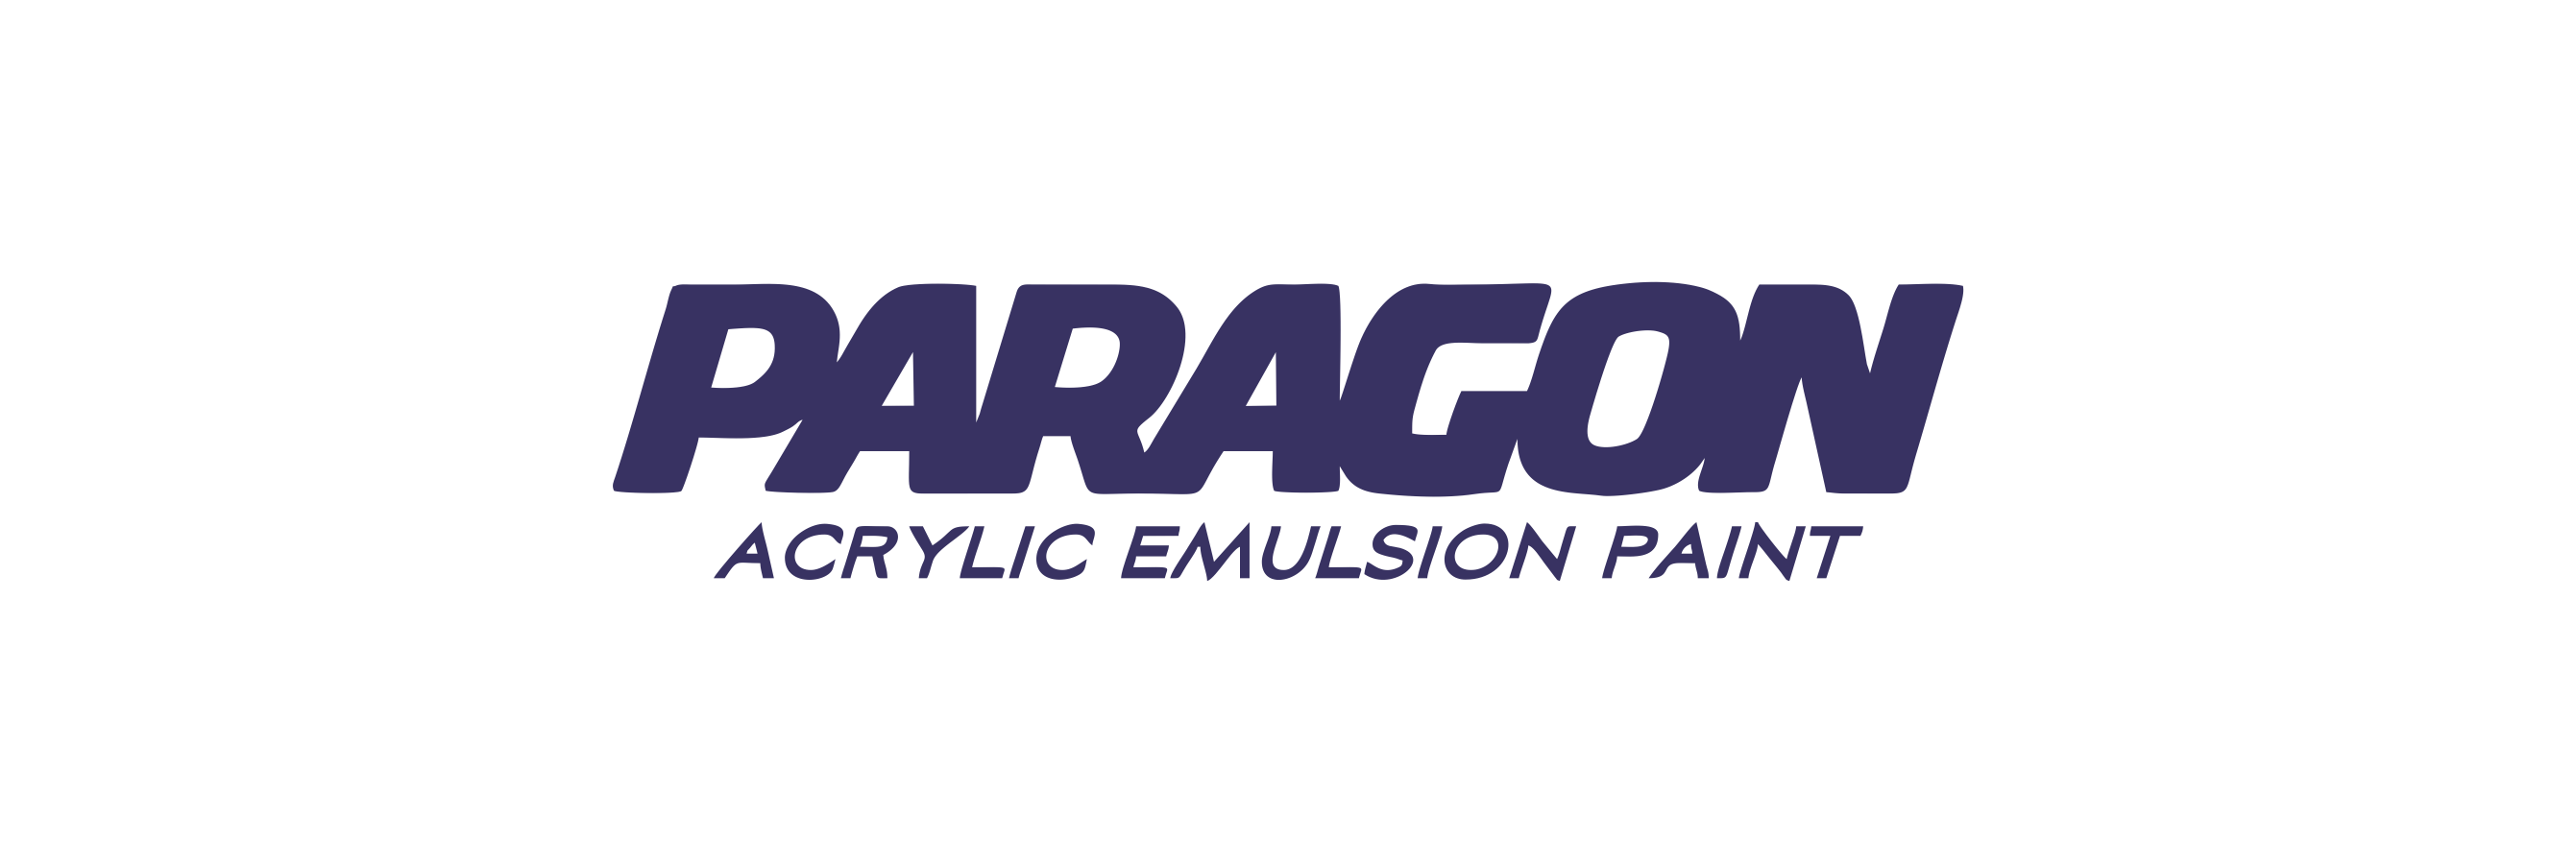 https://www.jagoanhosting.com/wp-content/uploads/2021/01/logo-brand-paragon.png